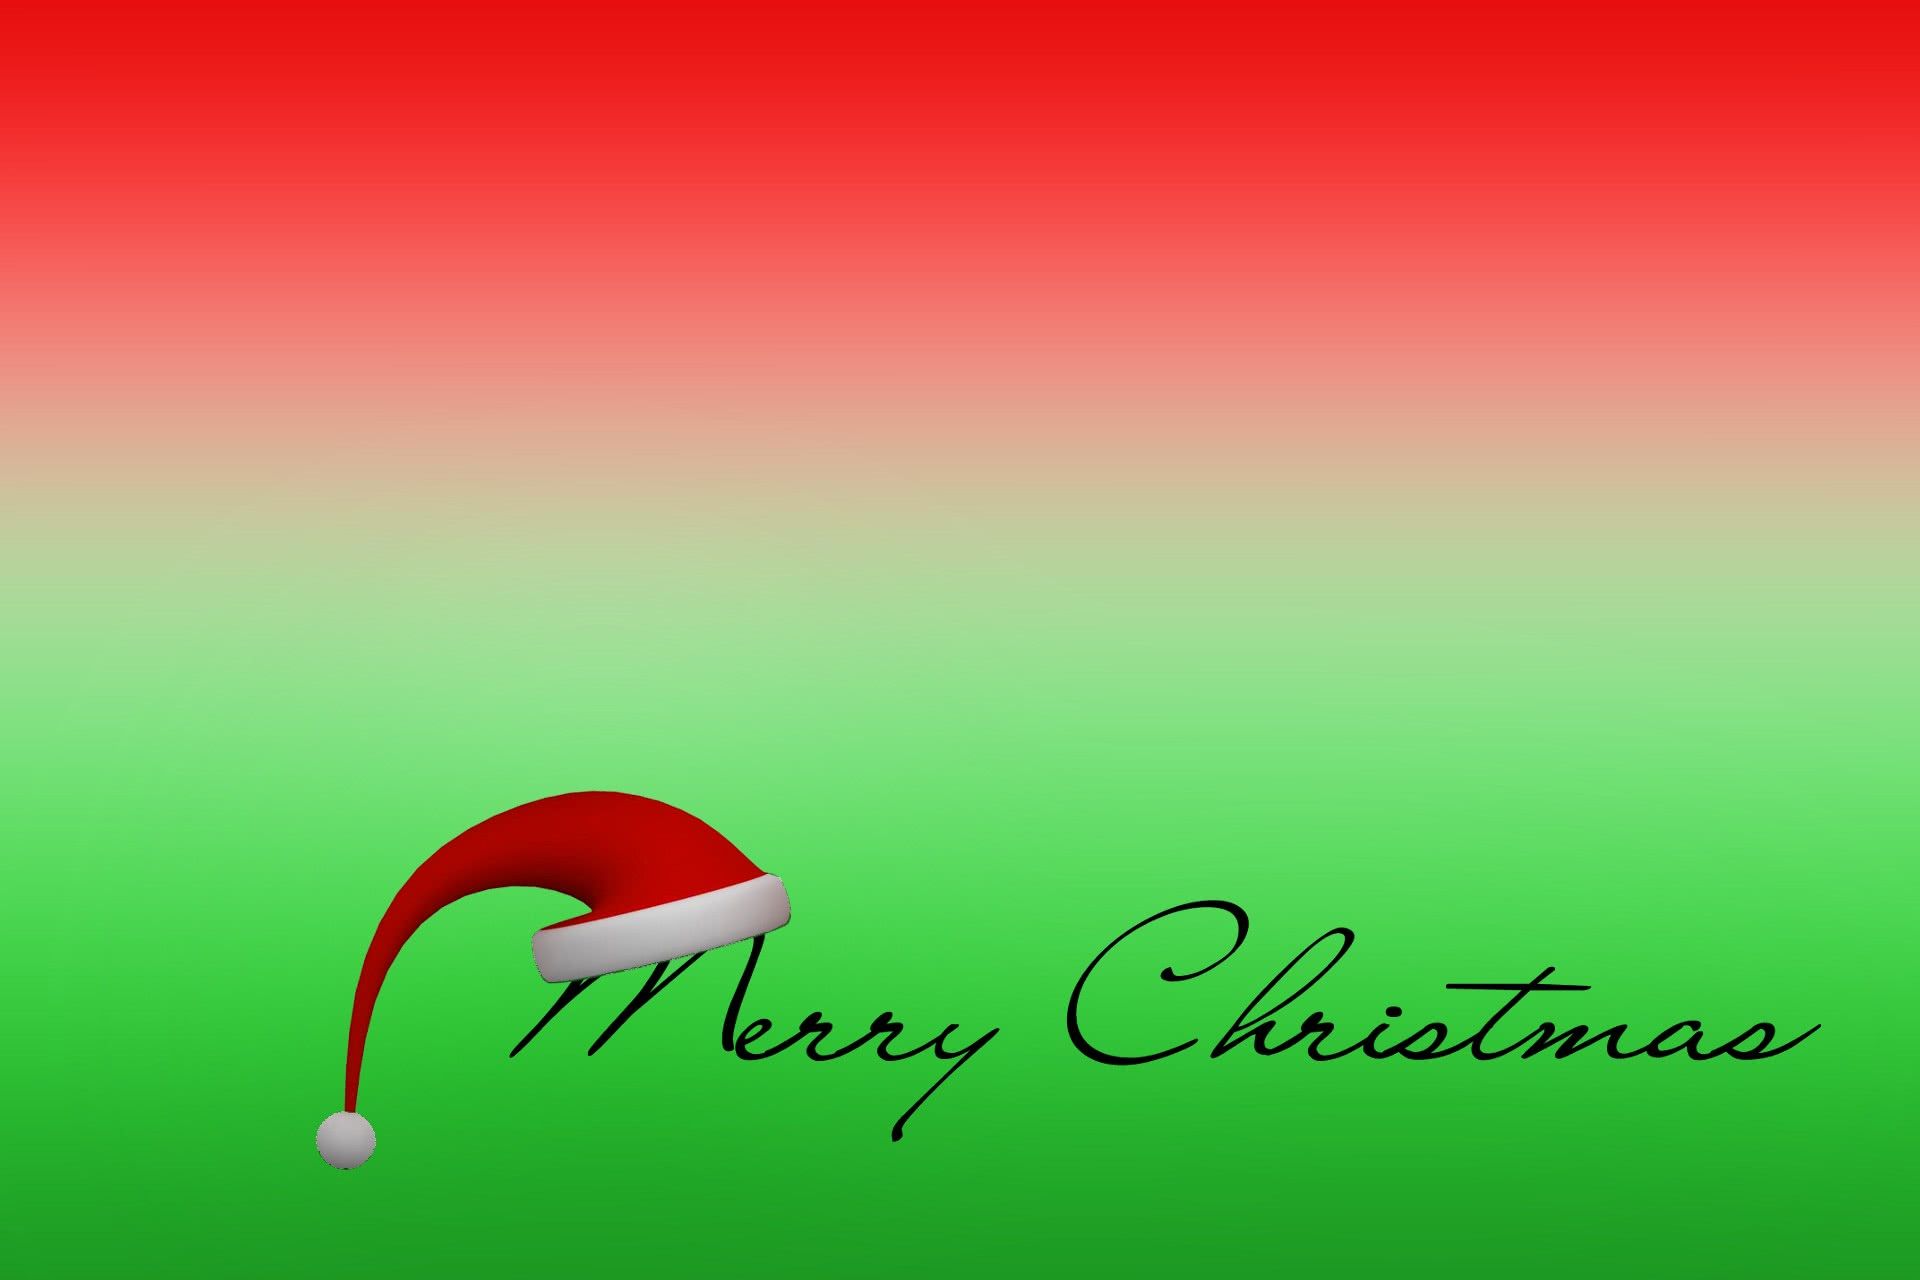 Merry Christmas Word Colors - Holiday Christmas Wallpaper Merry_Christmas_word_